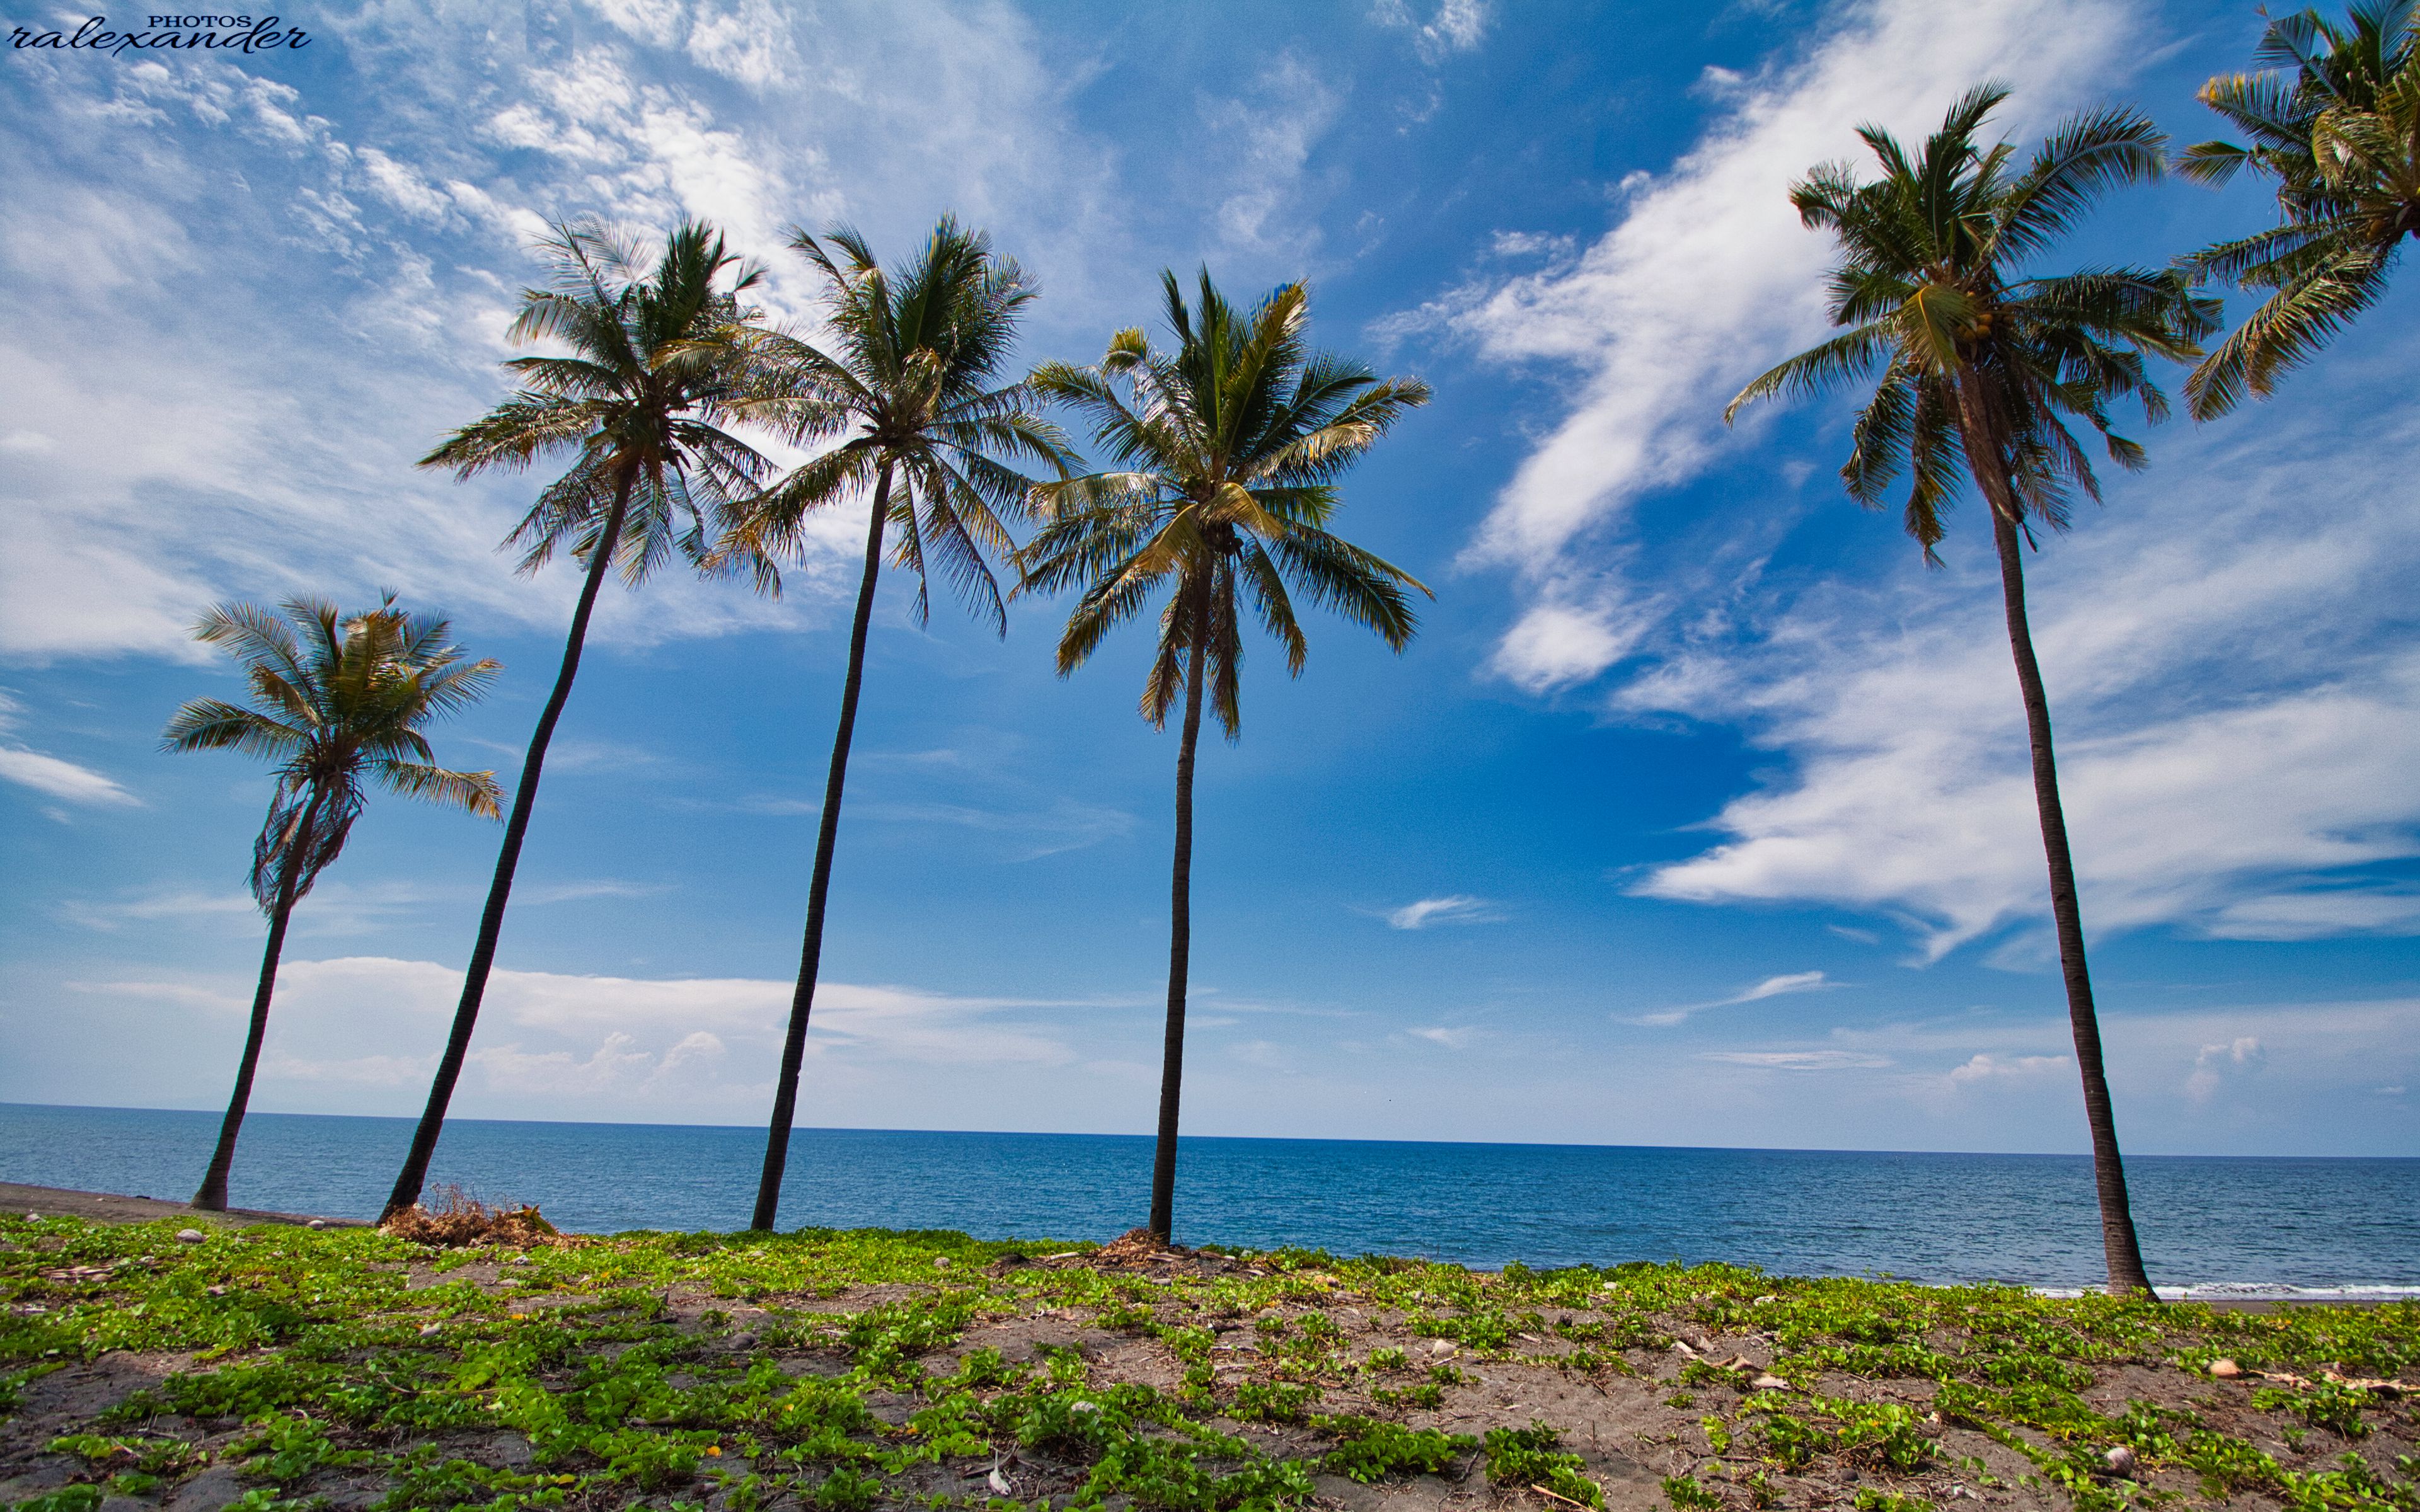 Download Wallpaper 3840x2400 Palms Trees Sea Tropics Landscape 4k